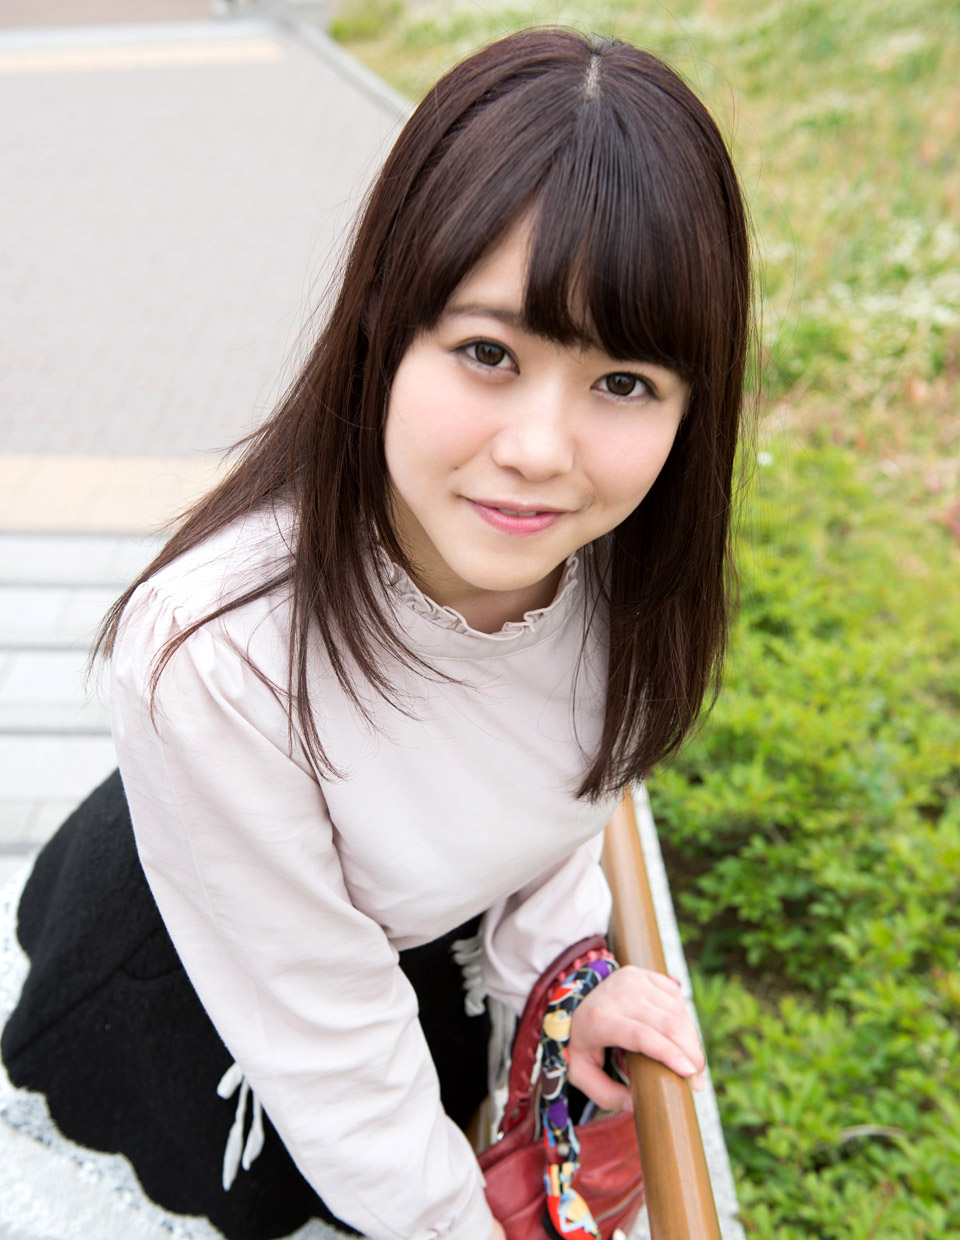 凉海美沙(涼海みさ、Misa Suzumi)写真资料职业历程实时更新